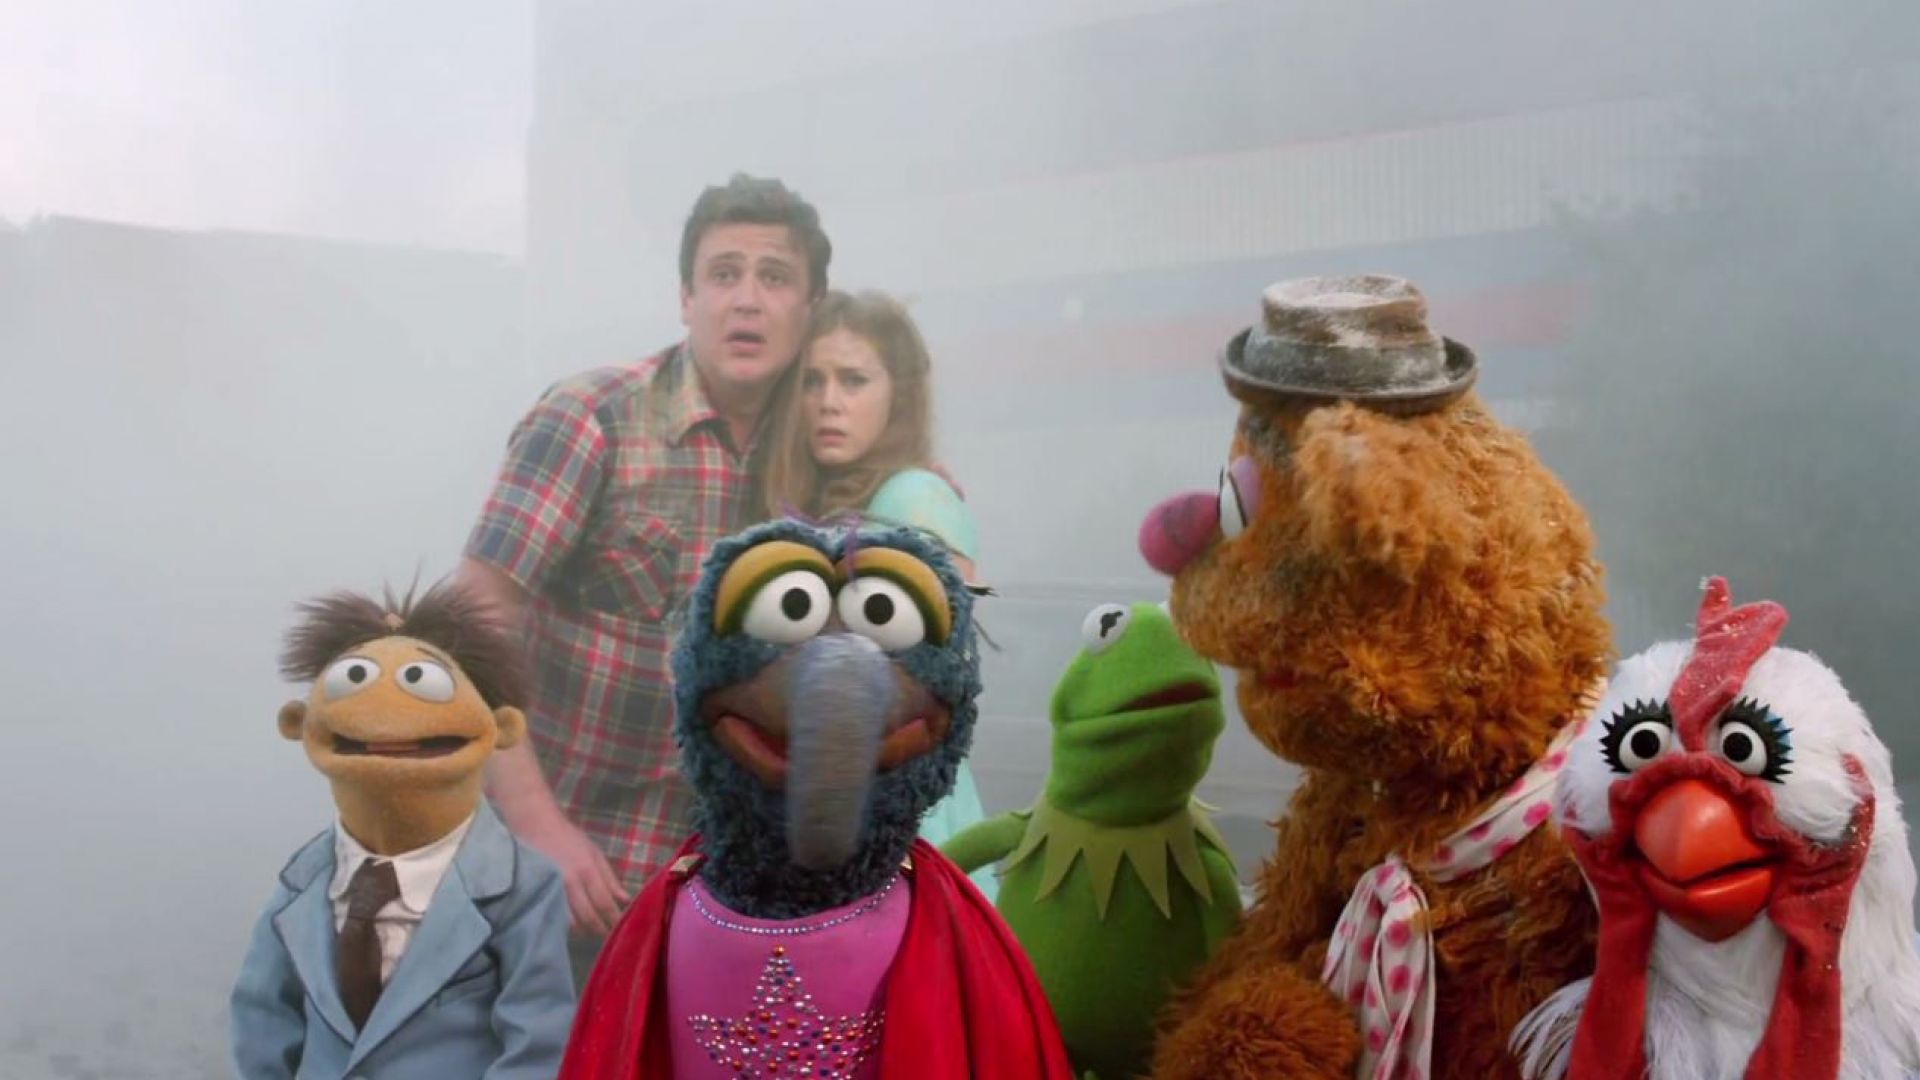 Kermit stars in the 2011 Muppets movie